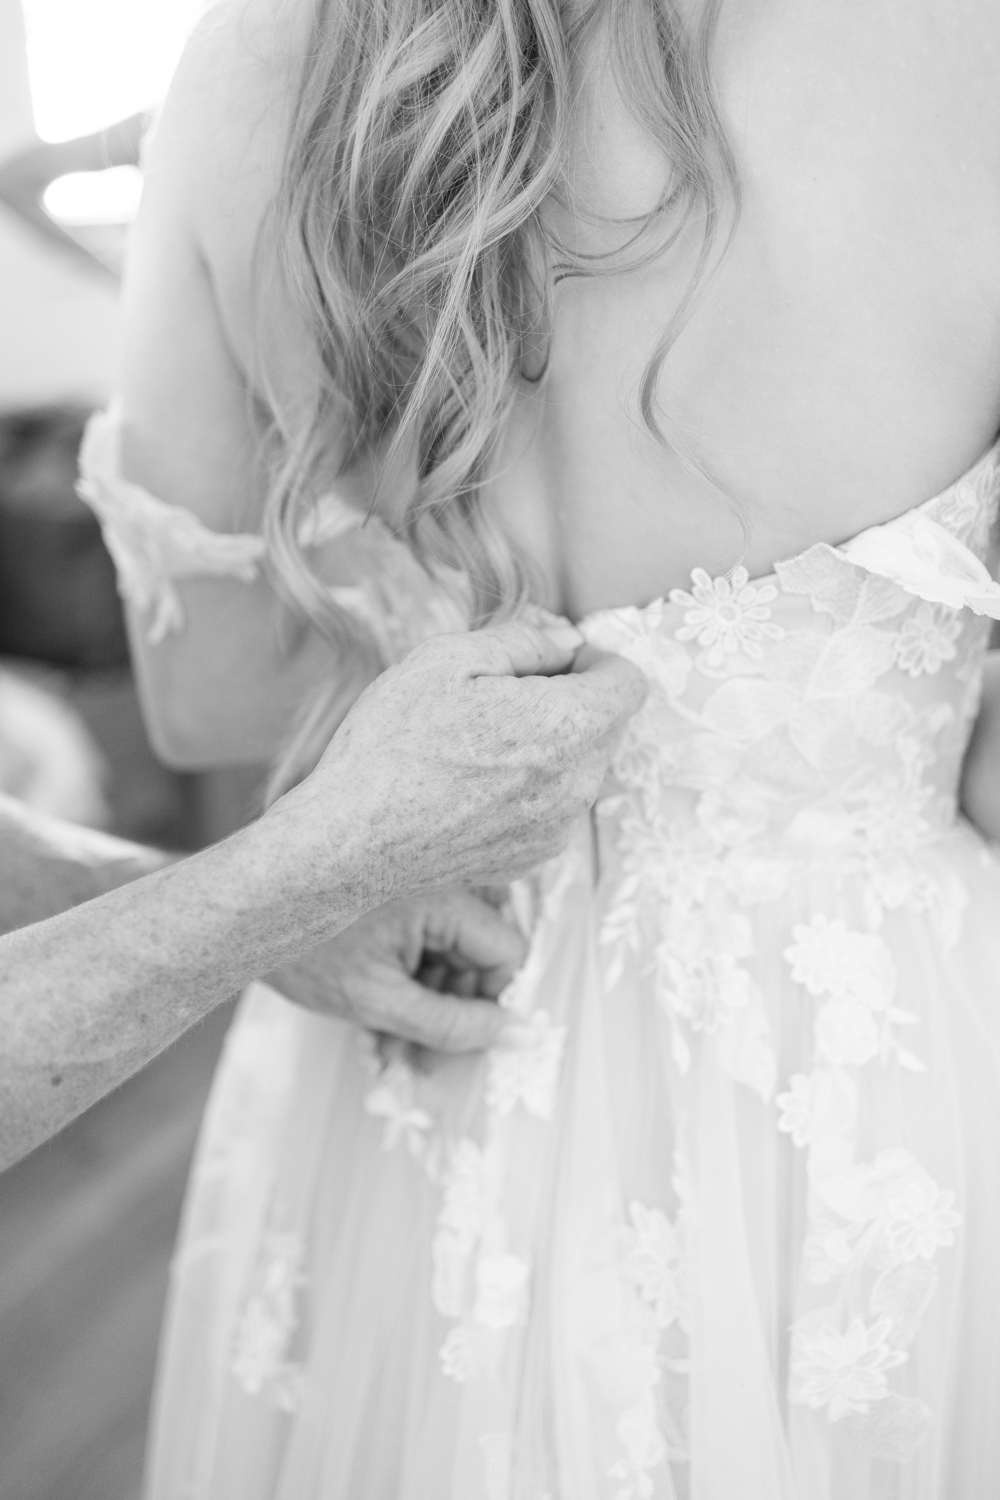 black and white photo hands zipping wedding dress